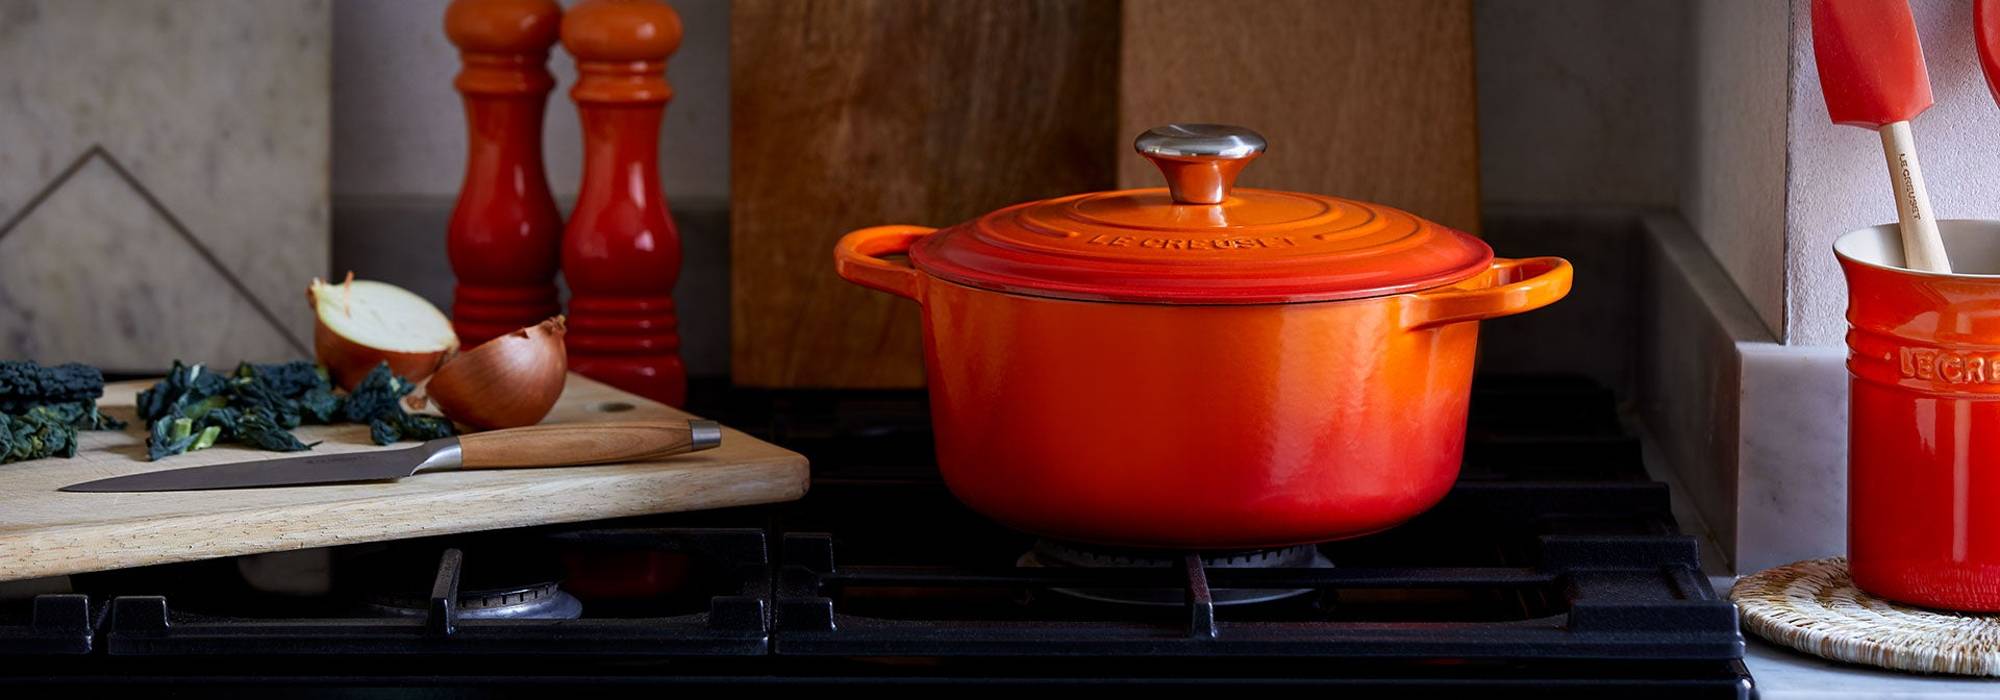 Le Creuset La Fonte enamel wok 36 cm, orange  Advantageously shopping at